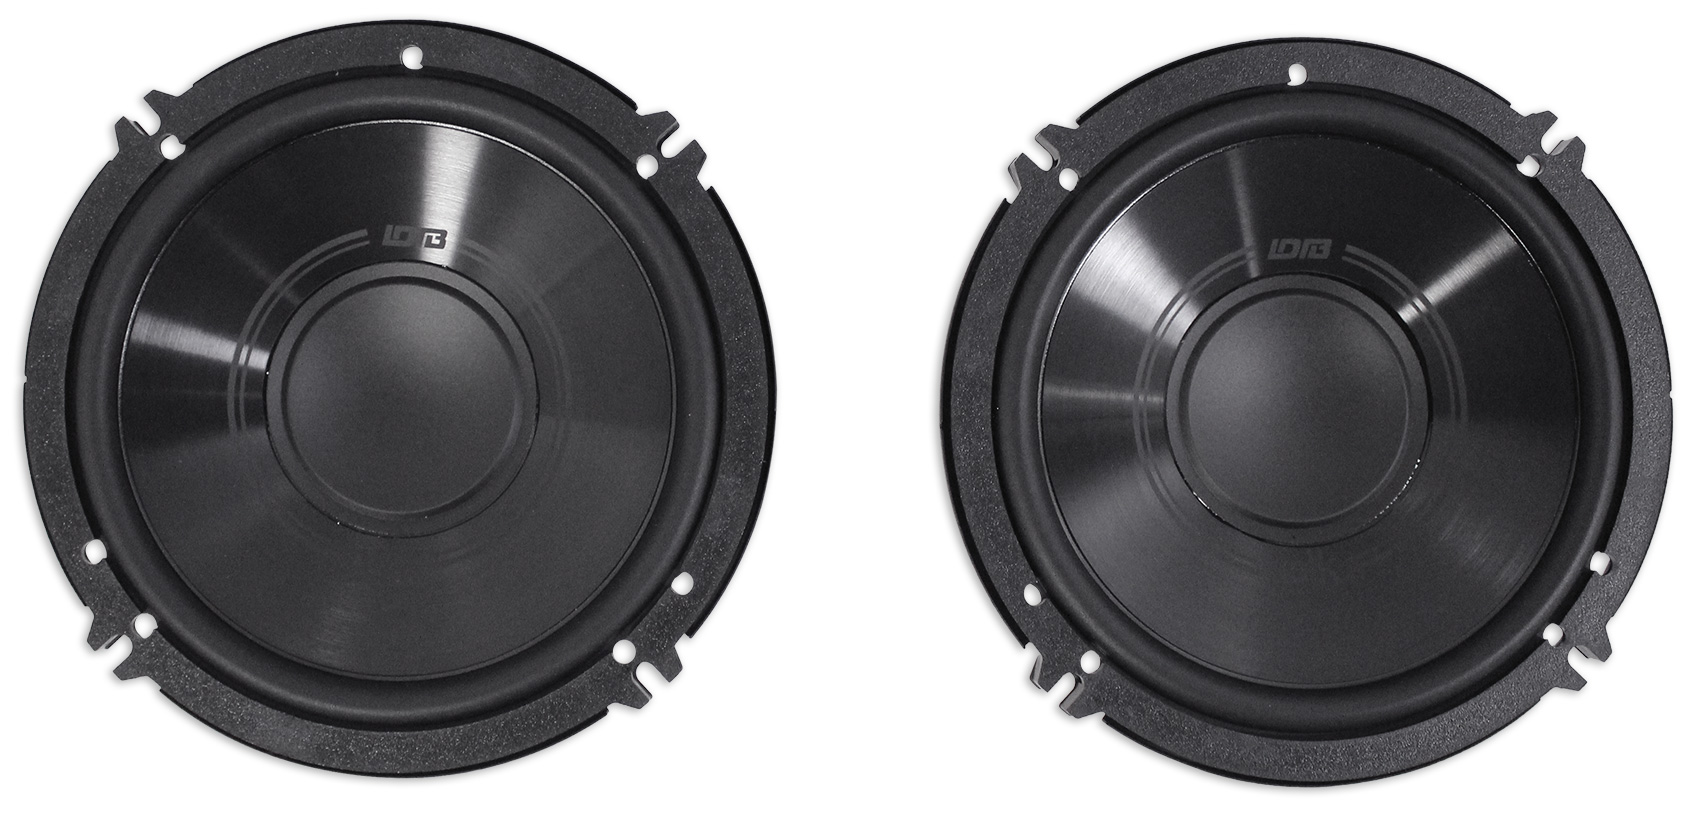 Polk Audio DB6502 6.5" 600w Component Car/Marine/ATV Speakers + Free Speaker - image 3 of 11